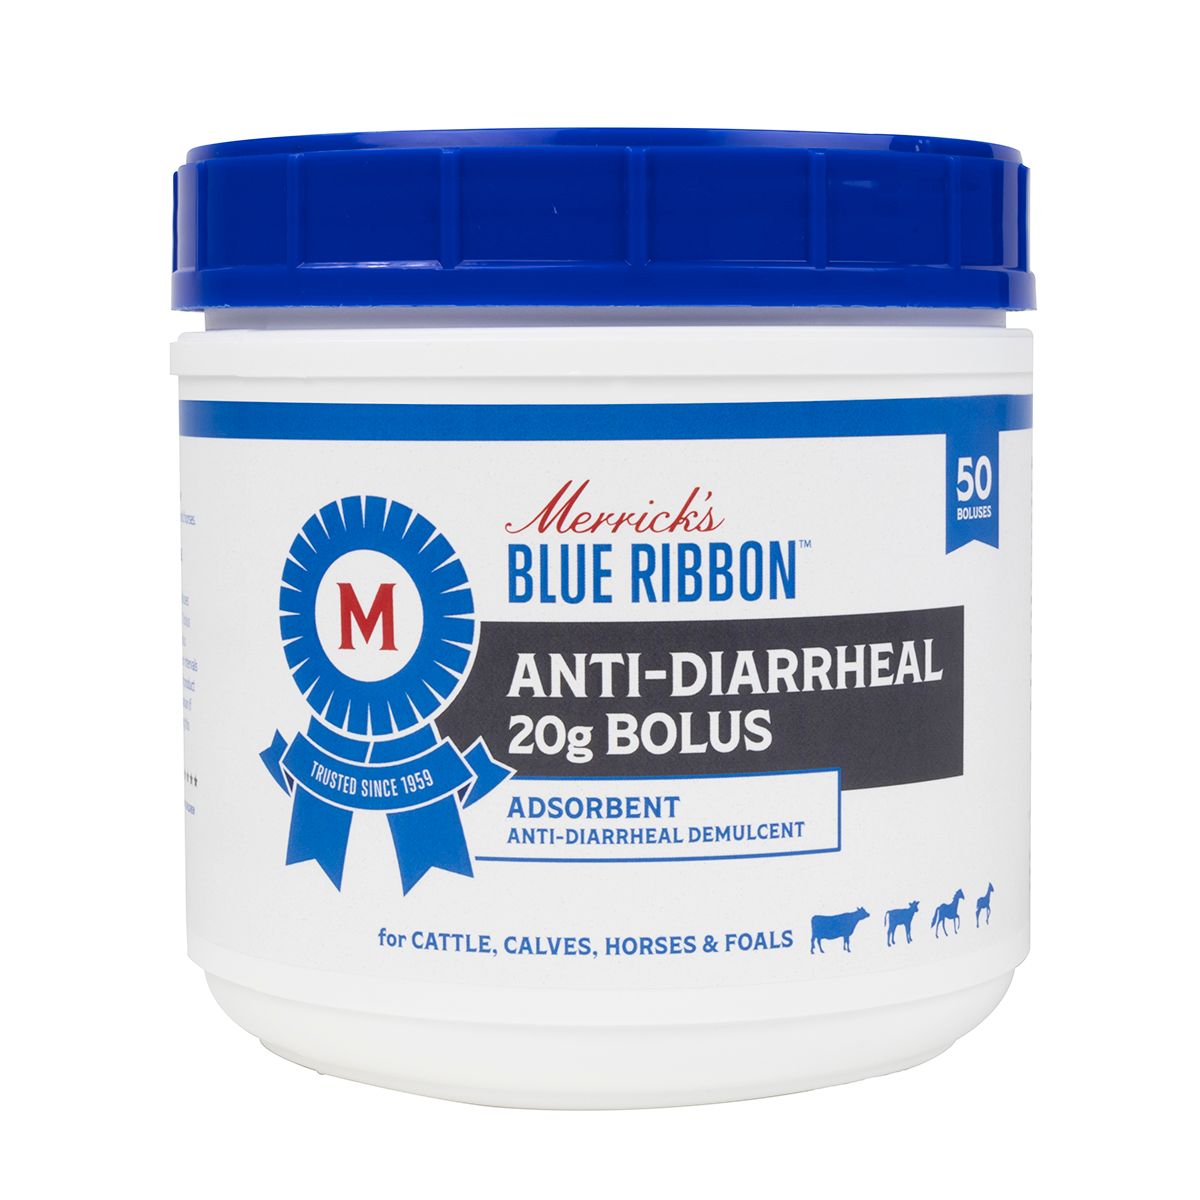 Blue Ribbon Anti-Diarrheal Boluses 50 ct.